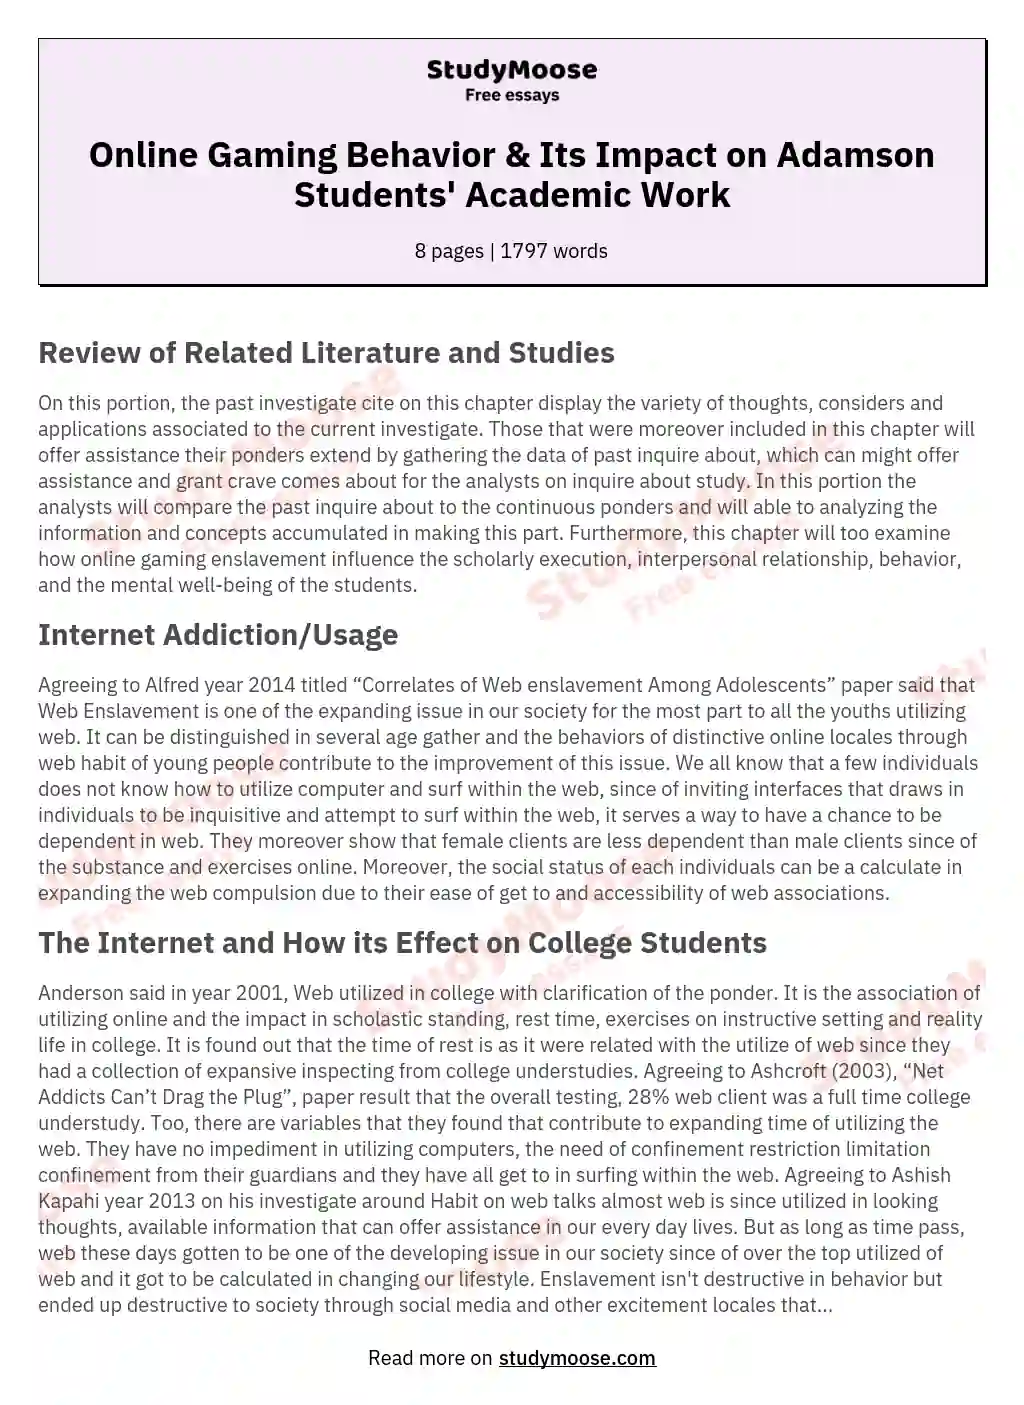 Online Gaming Behavior & Its Impact on Adamson Students' Academic Work essay